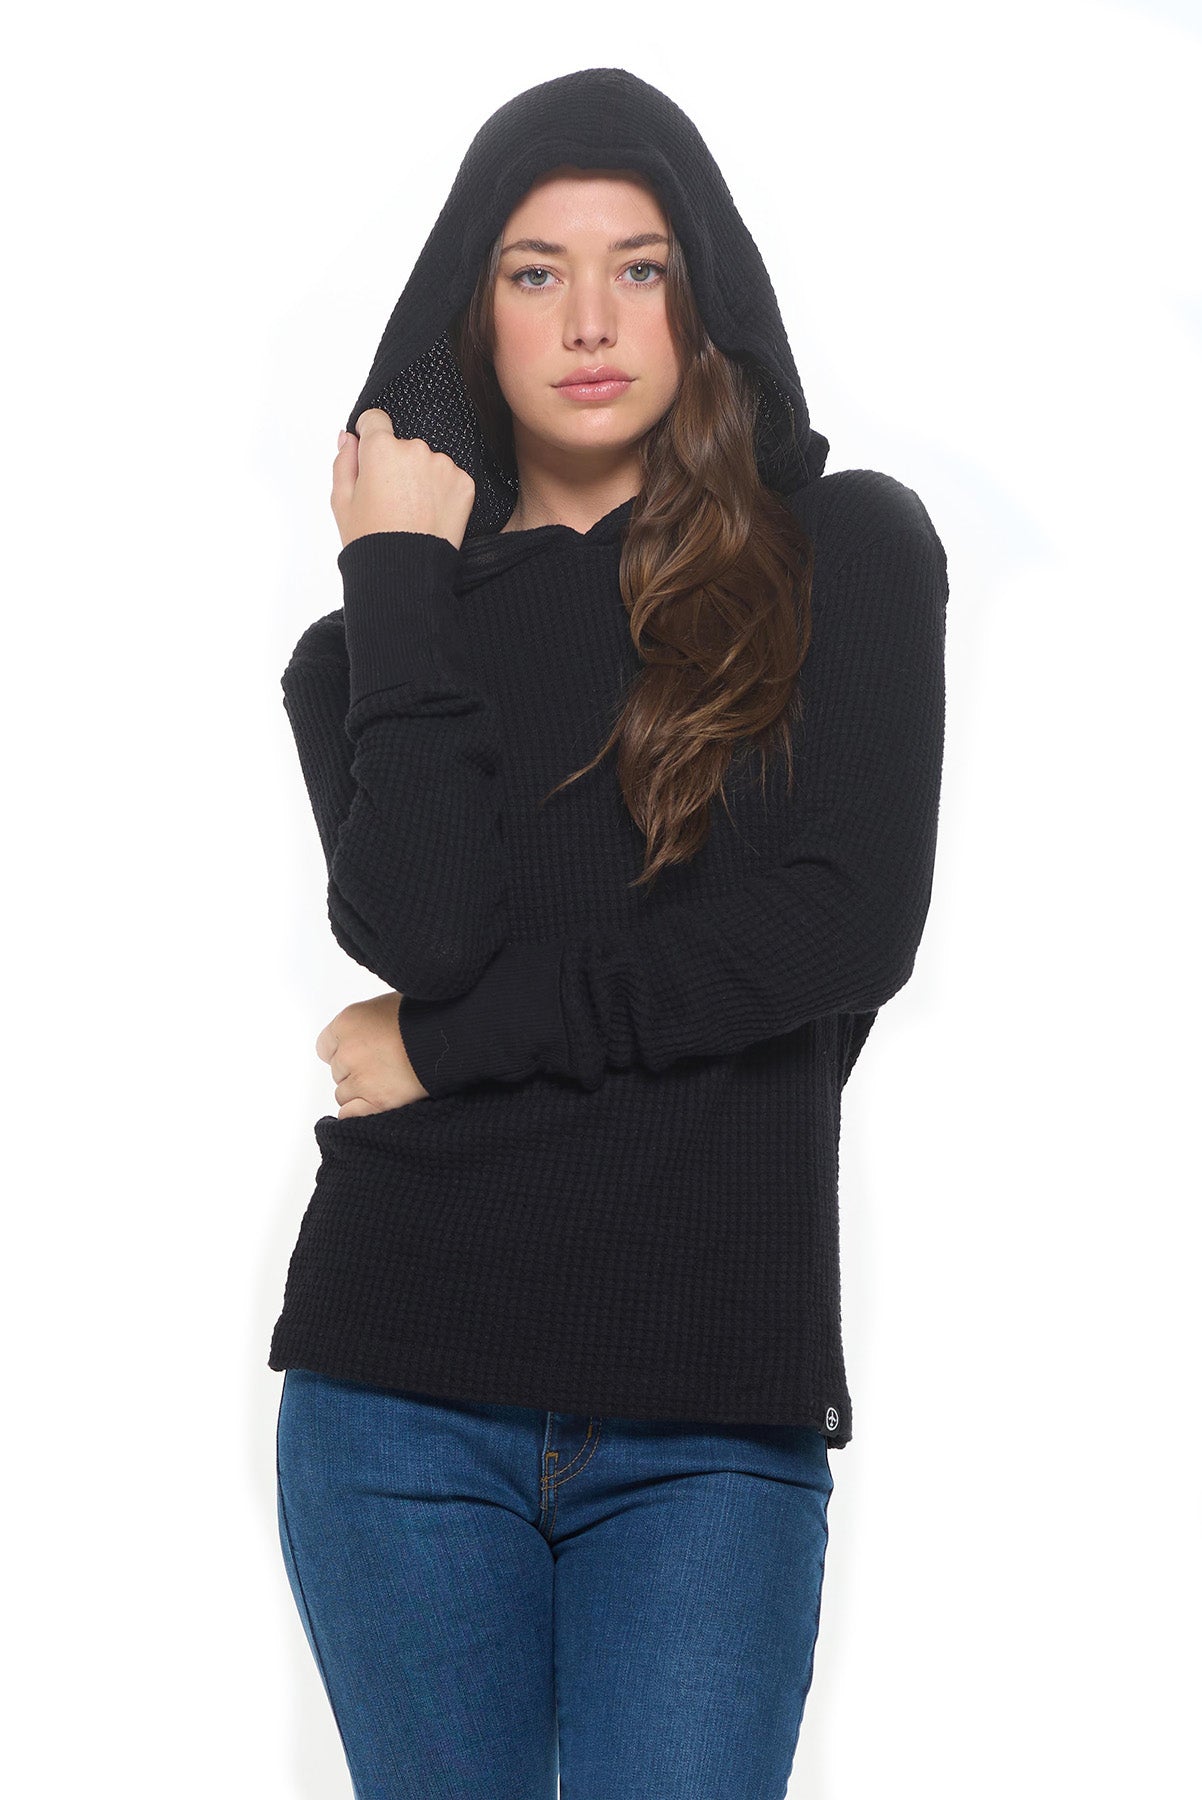 Female model wearing the black red eye thermal travel hoodie for women.